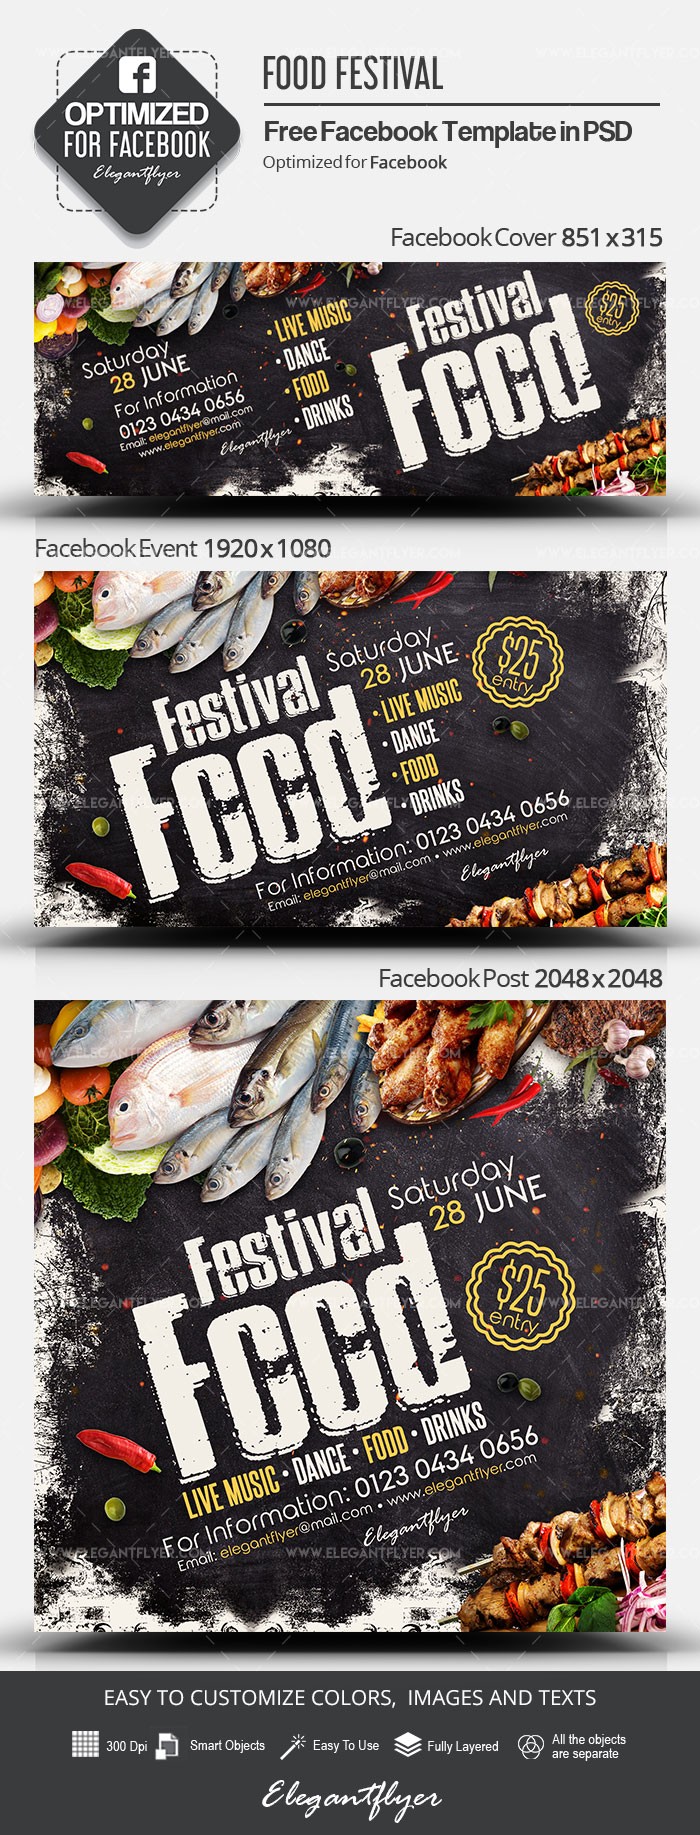 Food Festival Facebook by ElegantFlyer